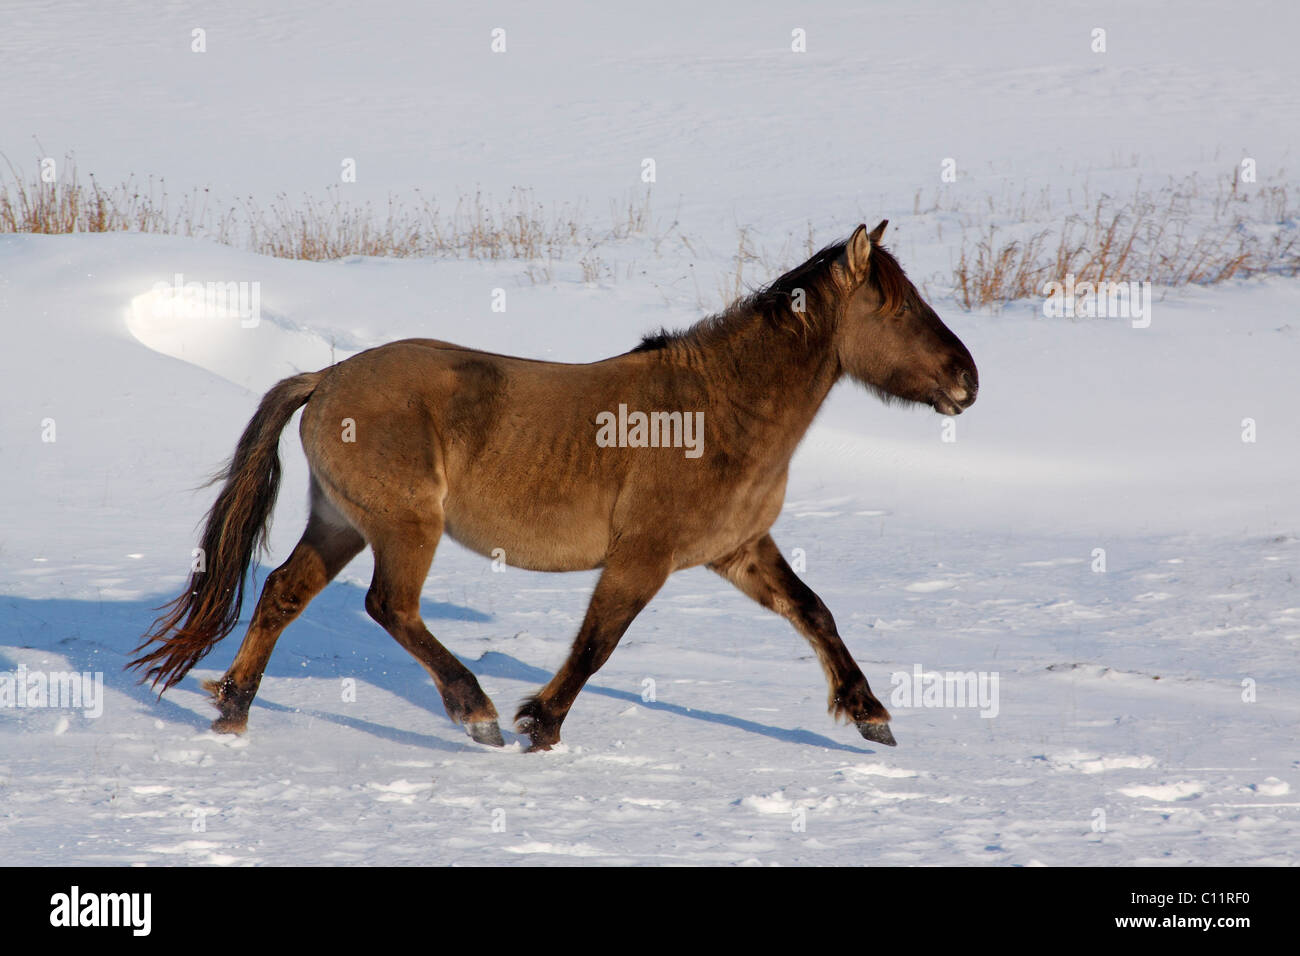 Konik or Polish Primitive Horse (Equus przewalskii f. caballus) walking in snow in winter Stock Photo